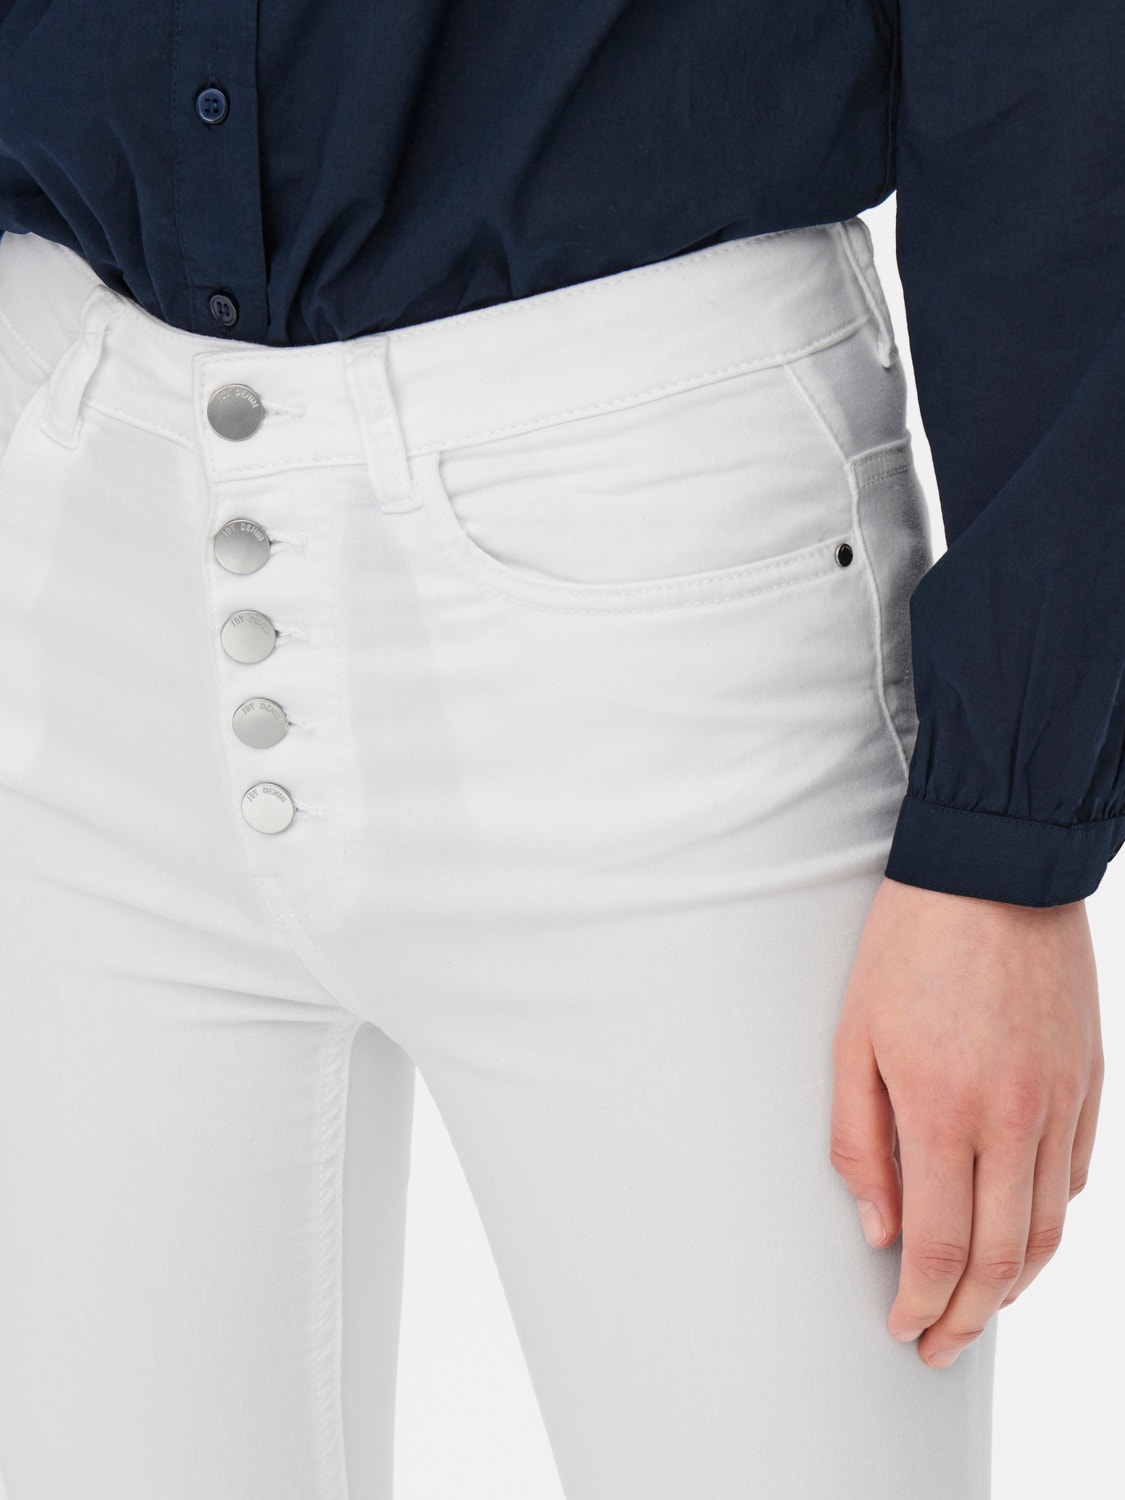 ONLY JDYLara Life HW Ank Button Skinny jeans -White - 15247662